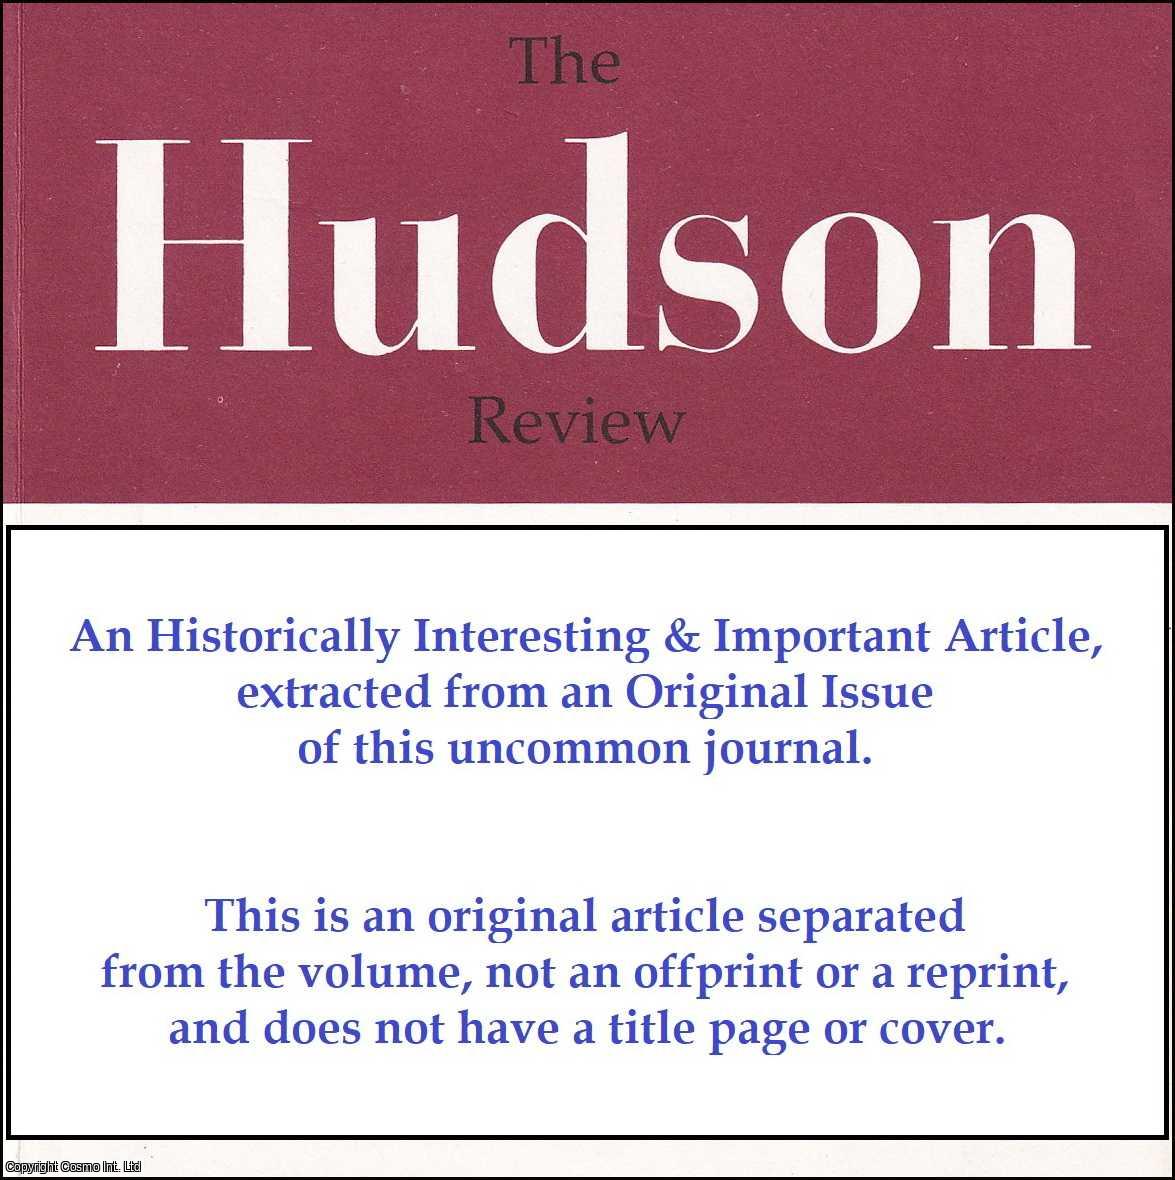 Susan Balee - Mammarian Musings. An original article from The Hudson Review, 1997.